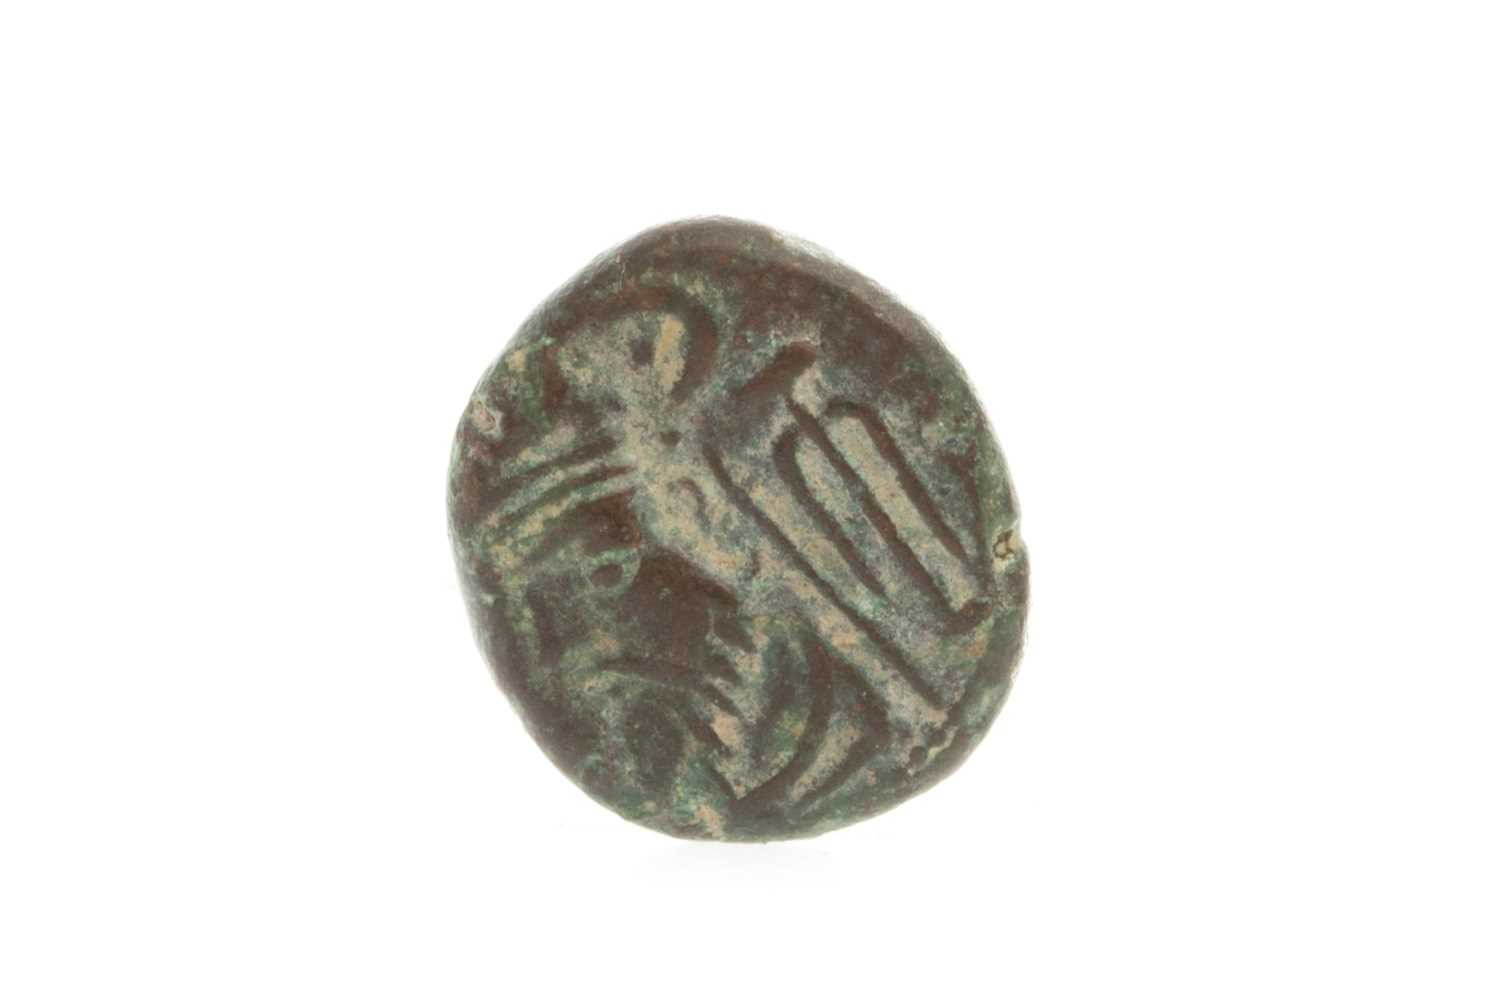 Lot 10 - AN ANCIENT DRACHMA COIN